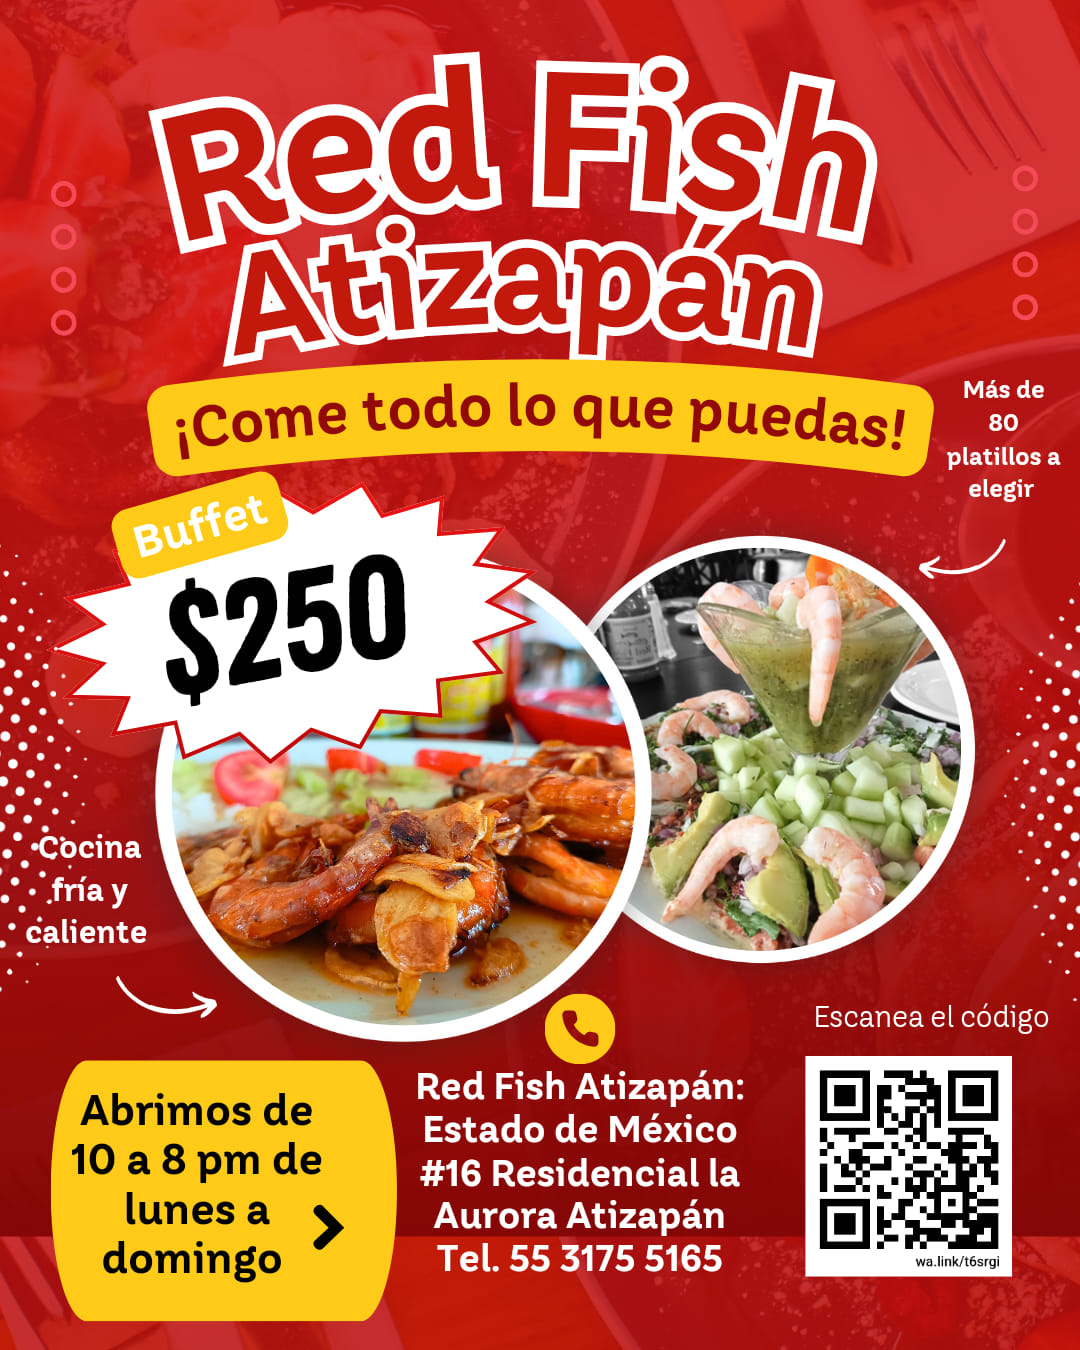 Buffet de mariscos en Atizapán por $250